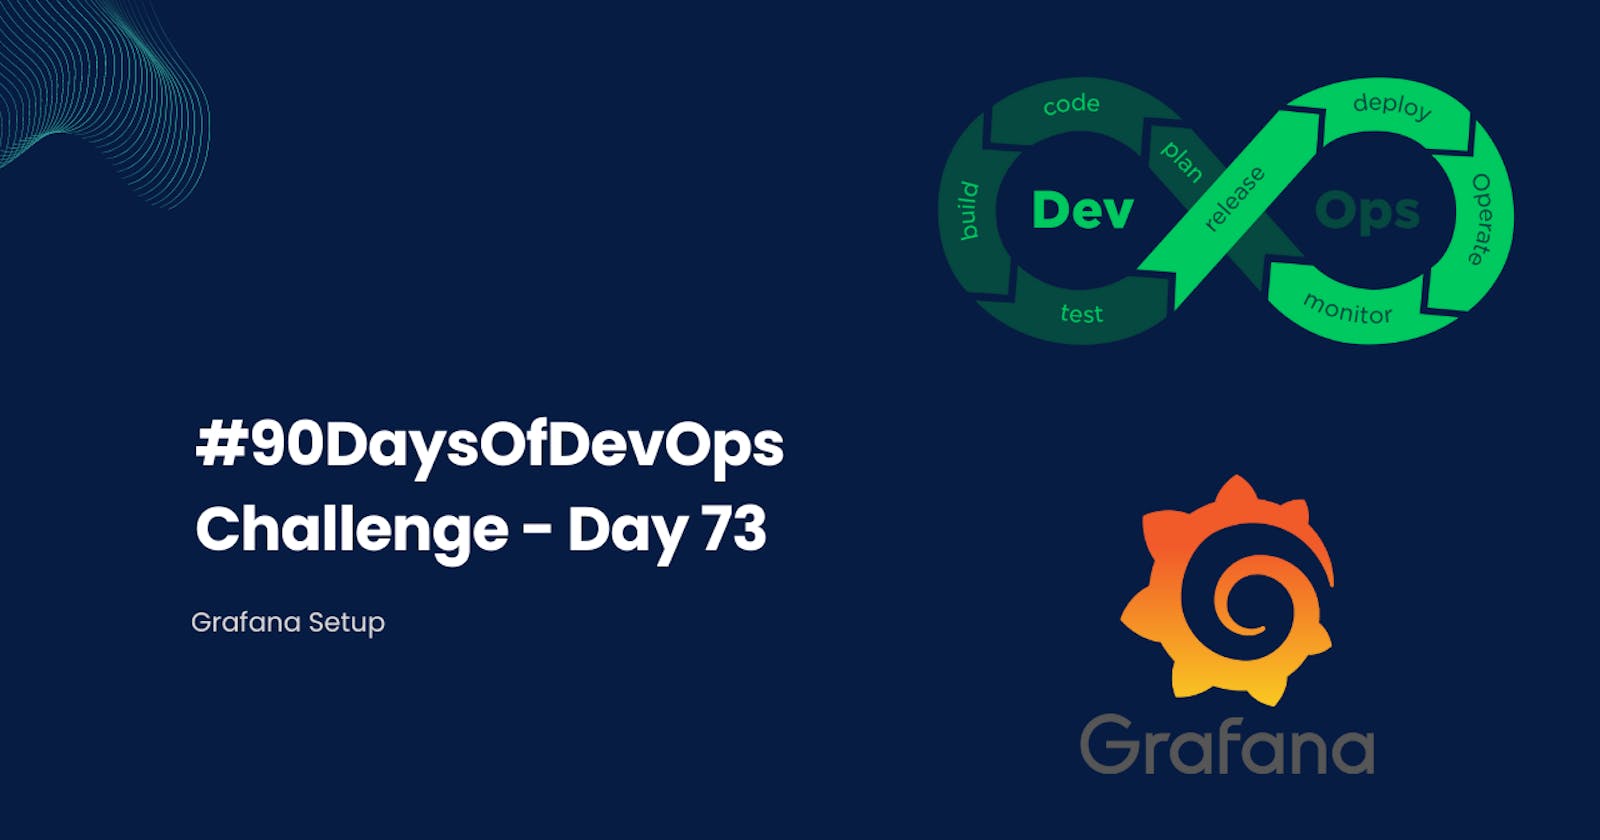 #90DaysOfDevOps Challenge - Day 73 - Grafana Setup